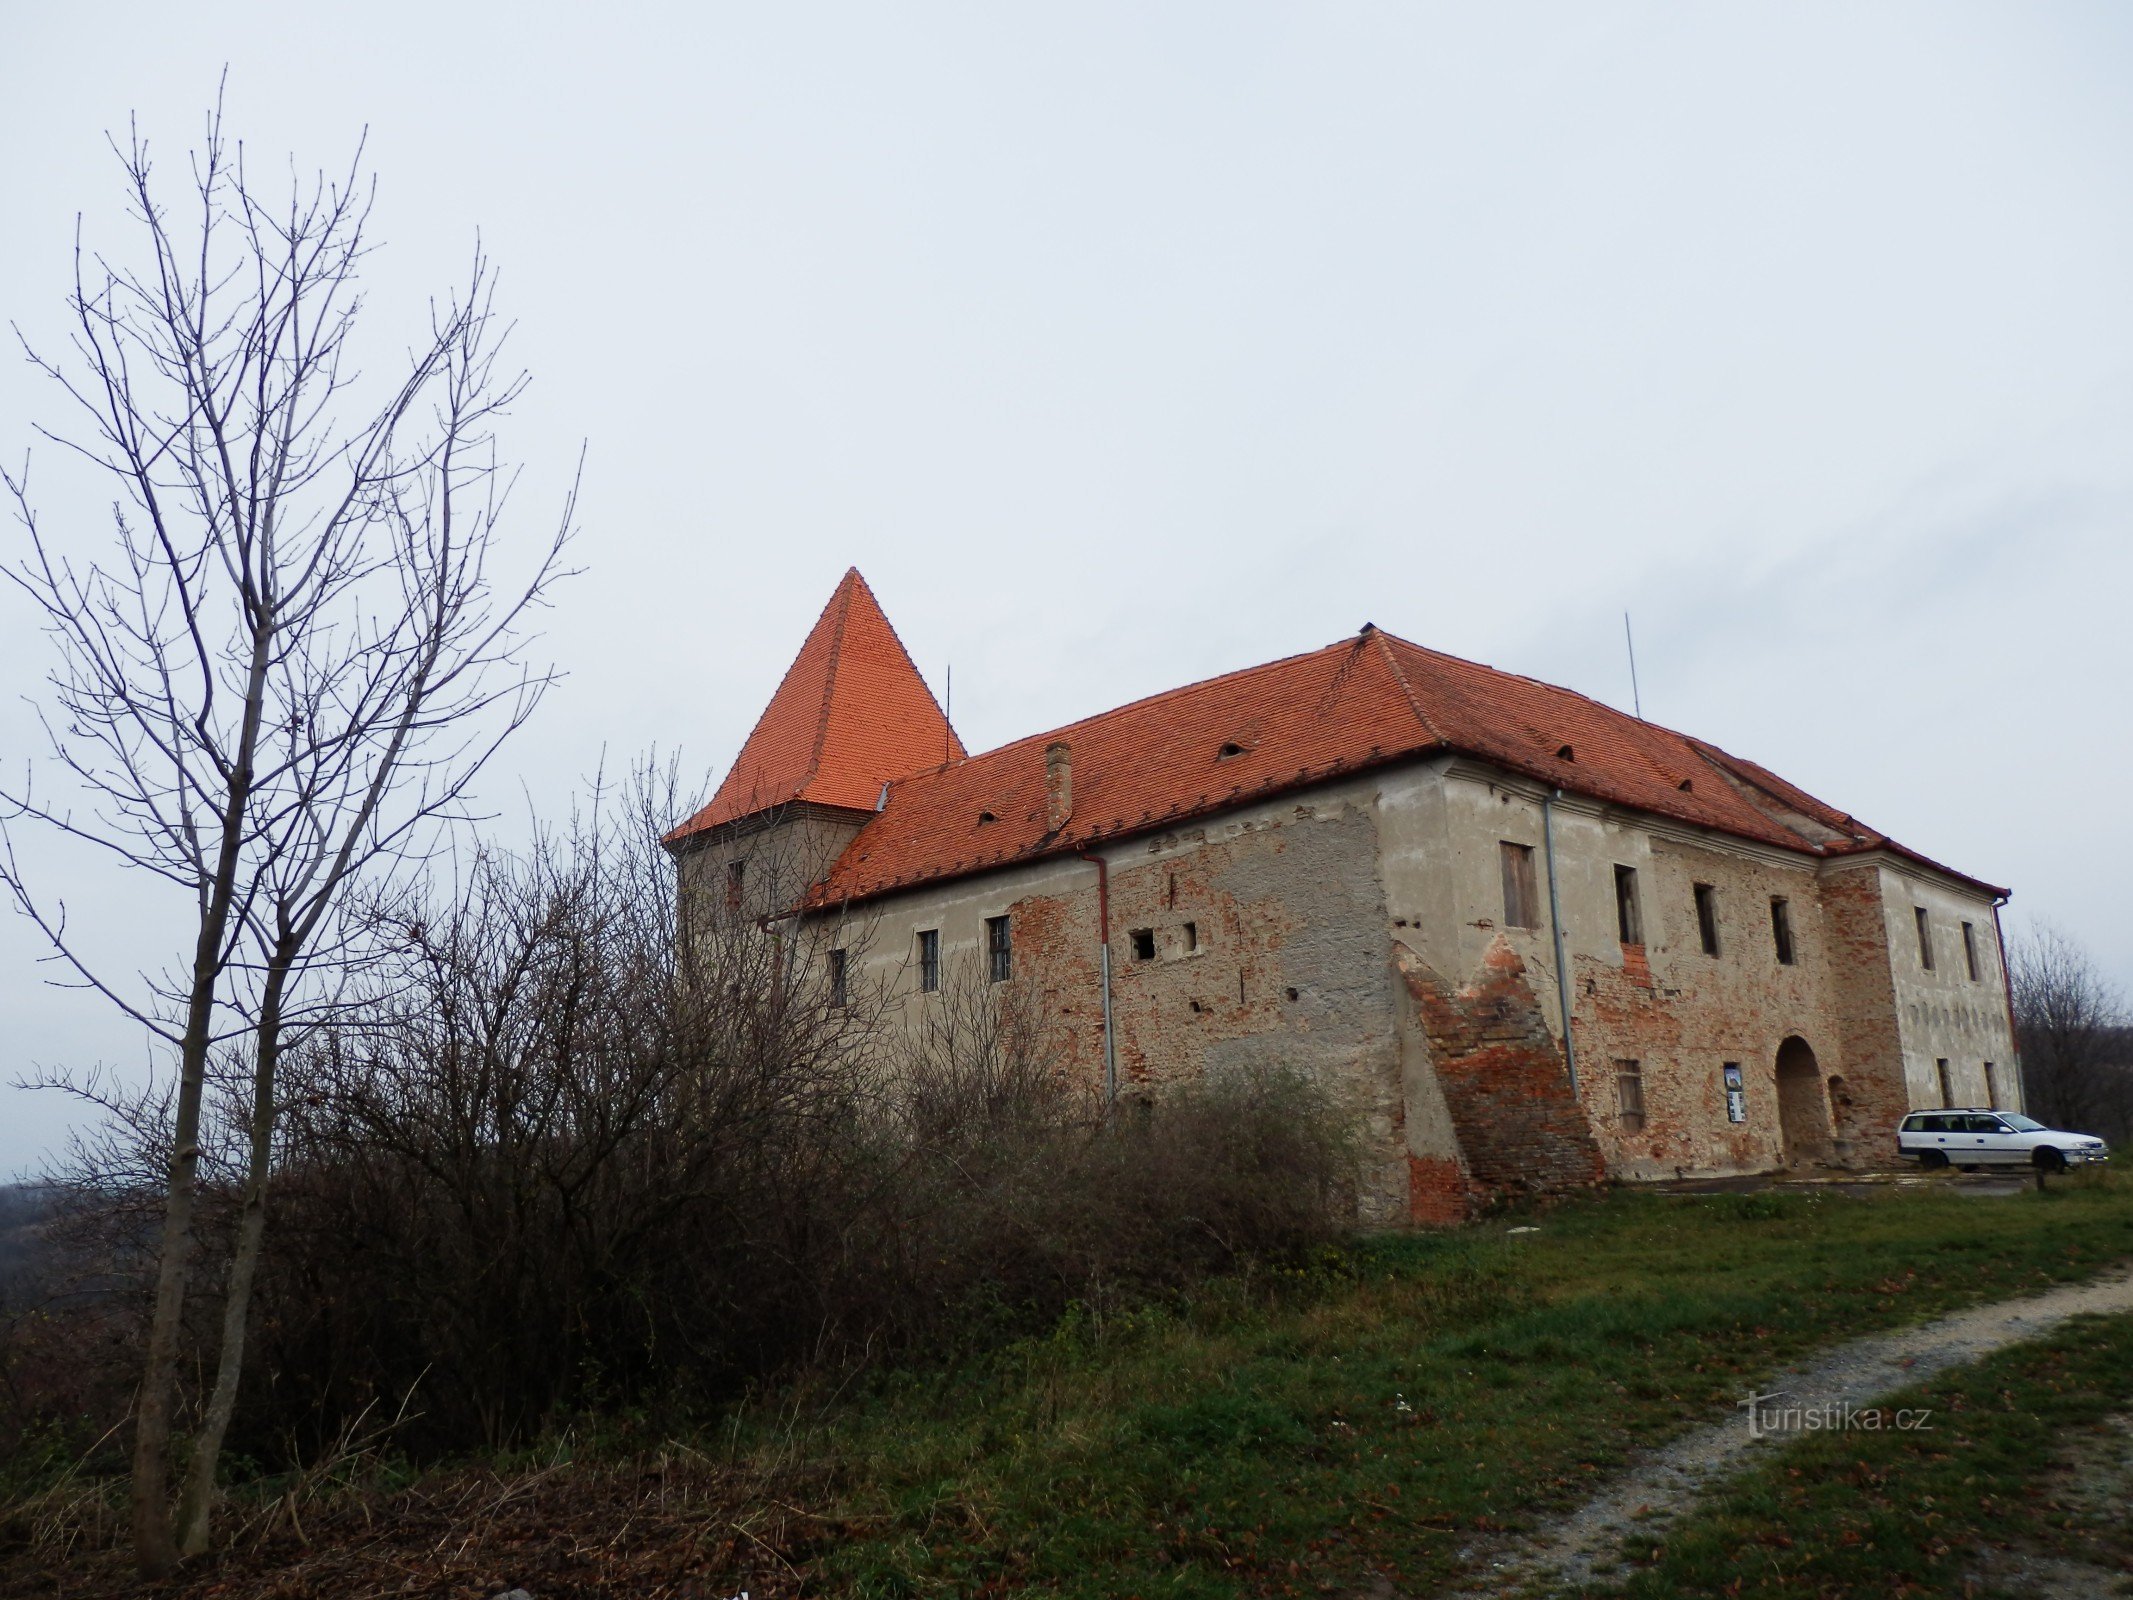 Bošovice - fortress